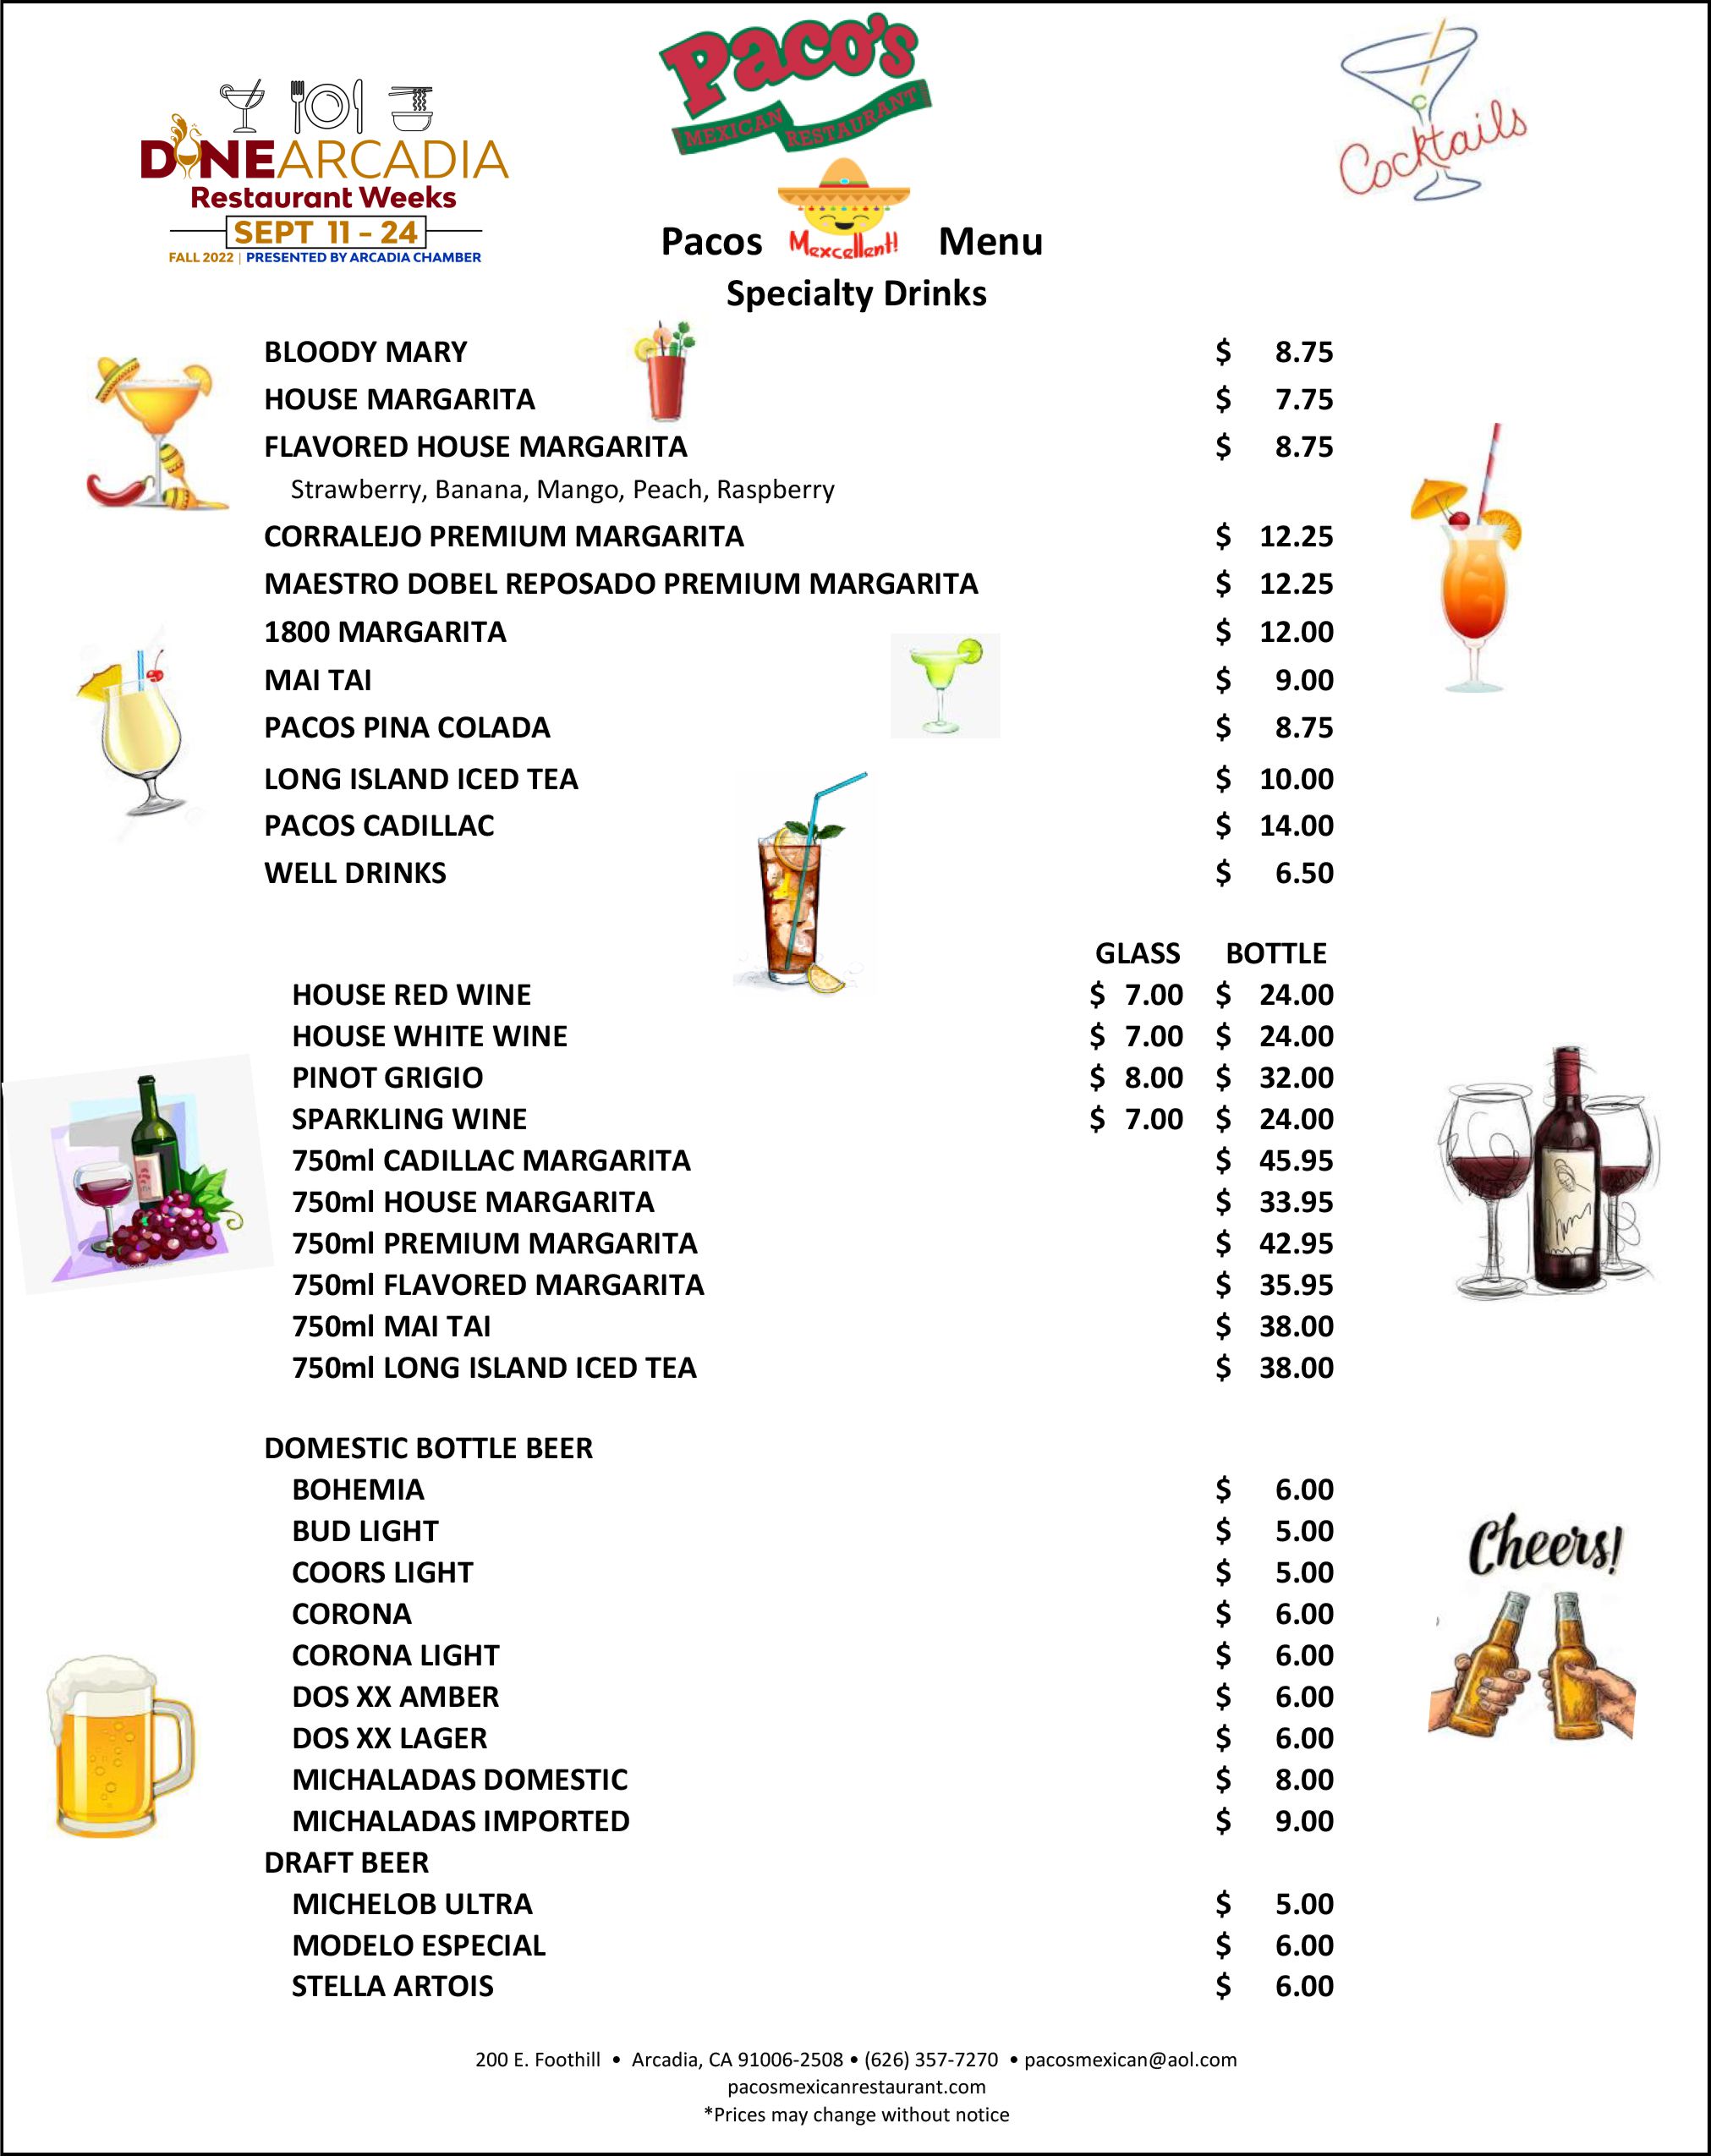 Paco's Dine Arcadia menu featuring liquor specials